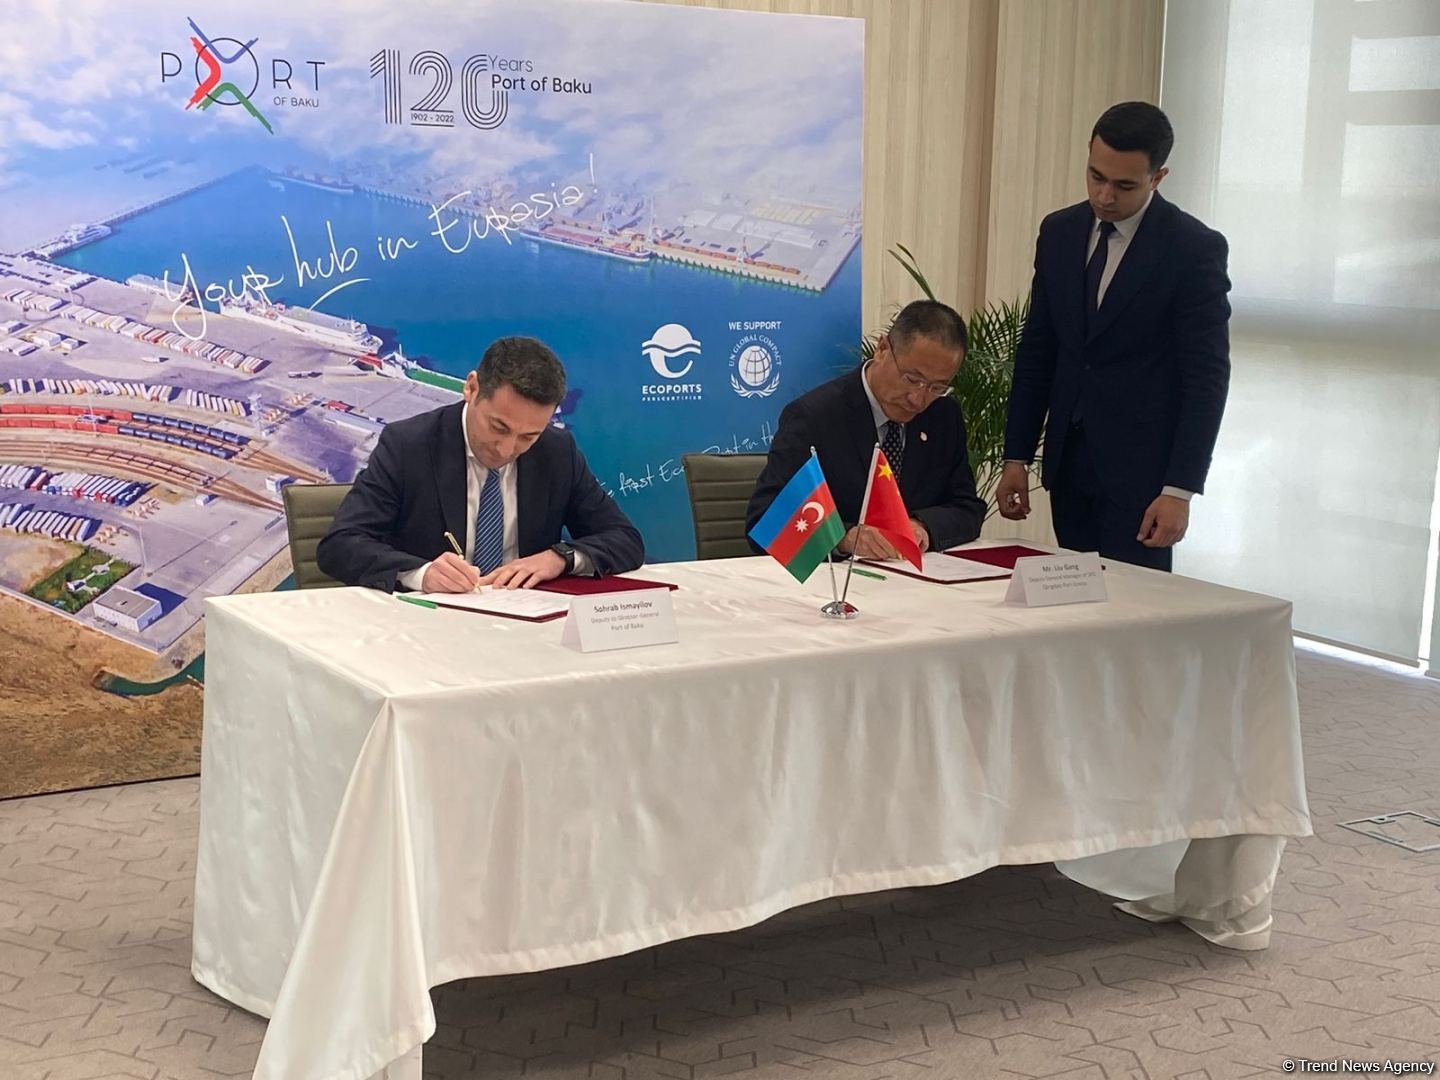 Port of Baku, Chinese port of Qingdao sign MoU